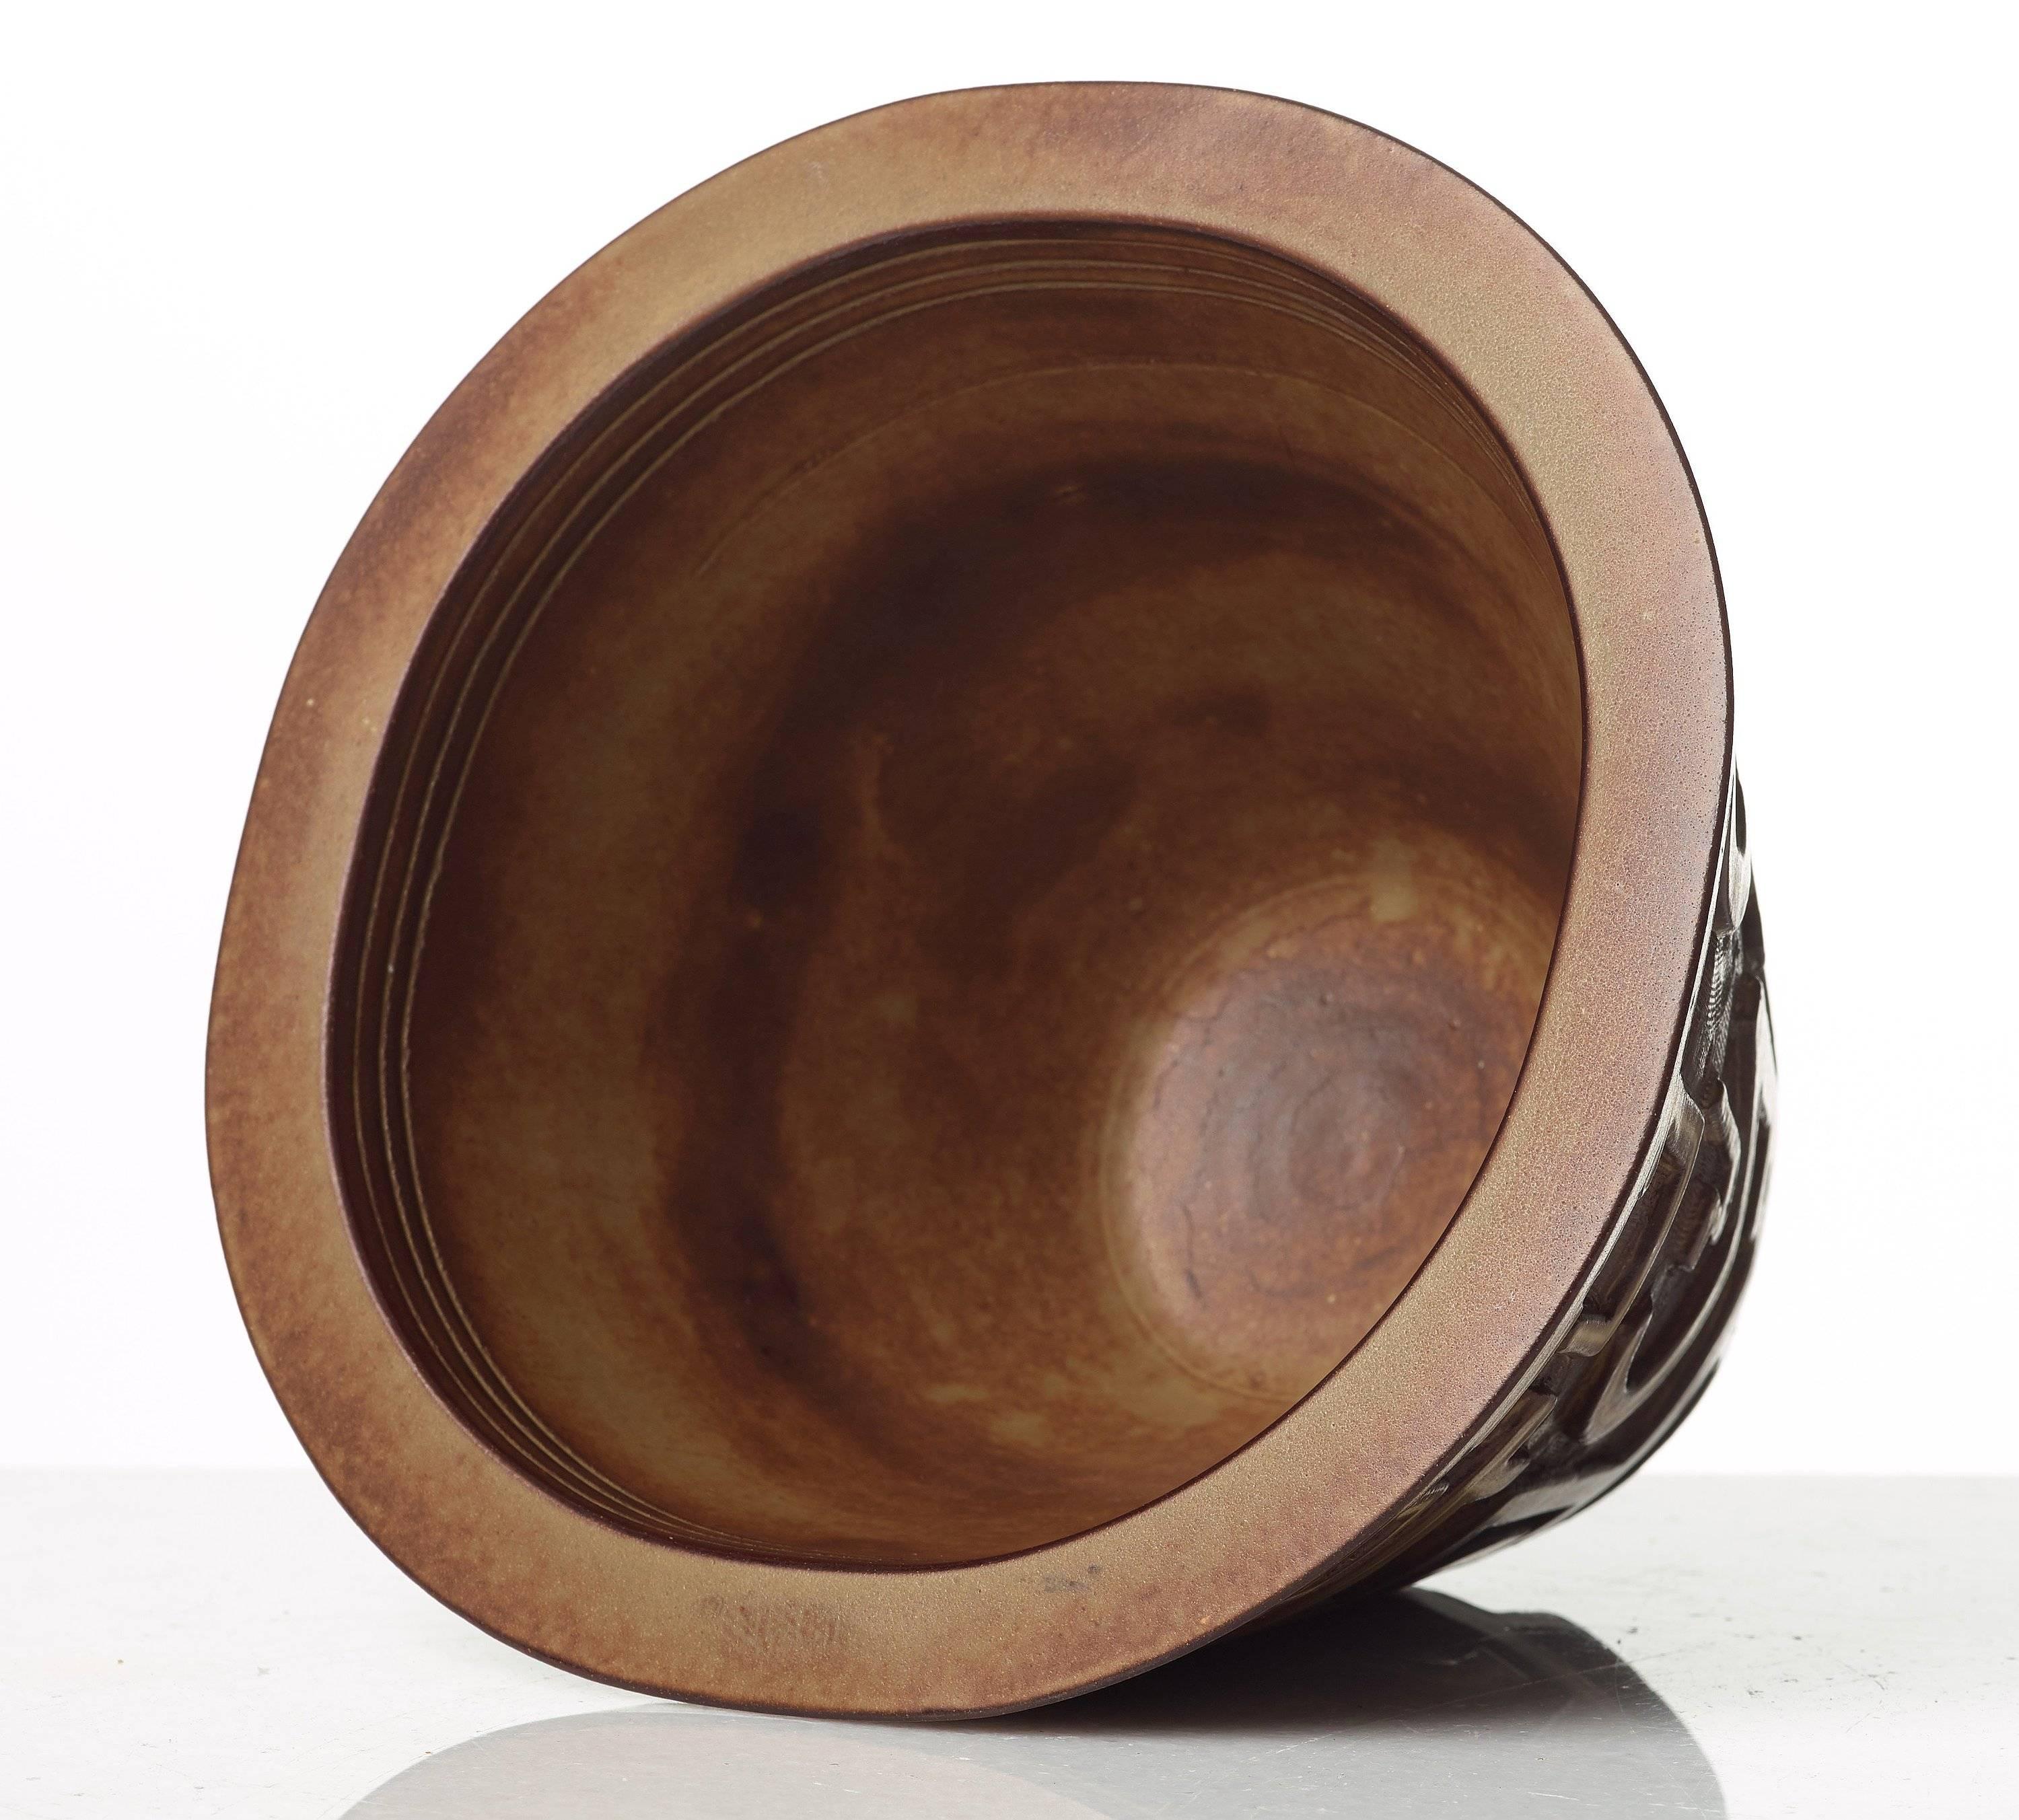 Unique Farsta stoneware bowl by Wilhelm Kåge for Gustavsberg.
Measures: Height 15.5 / 6.1